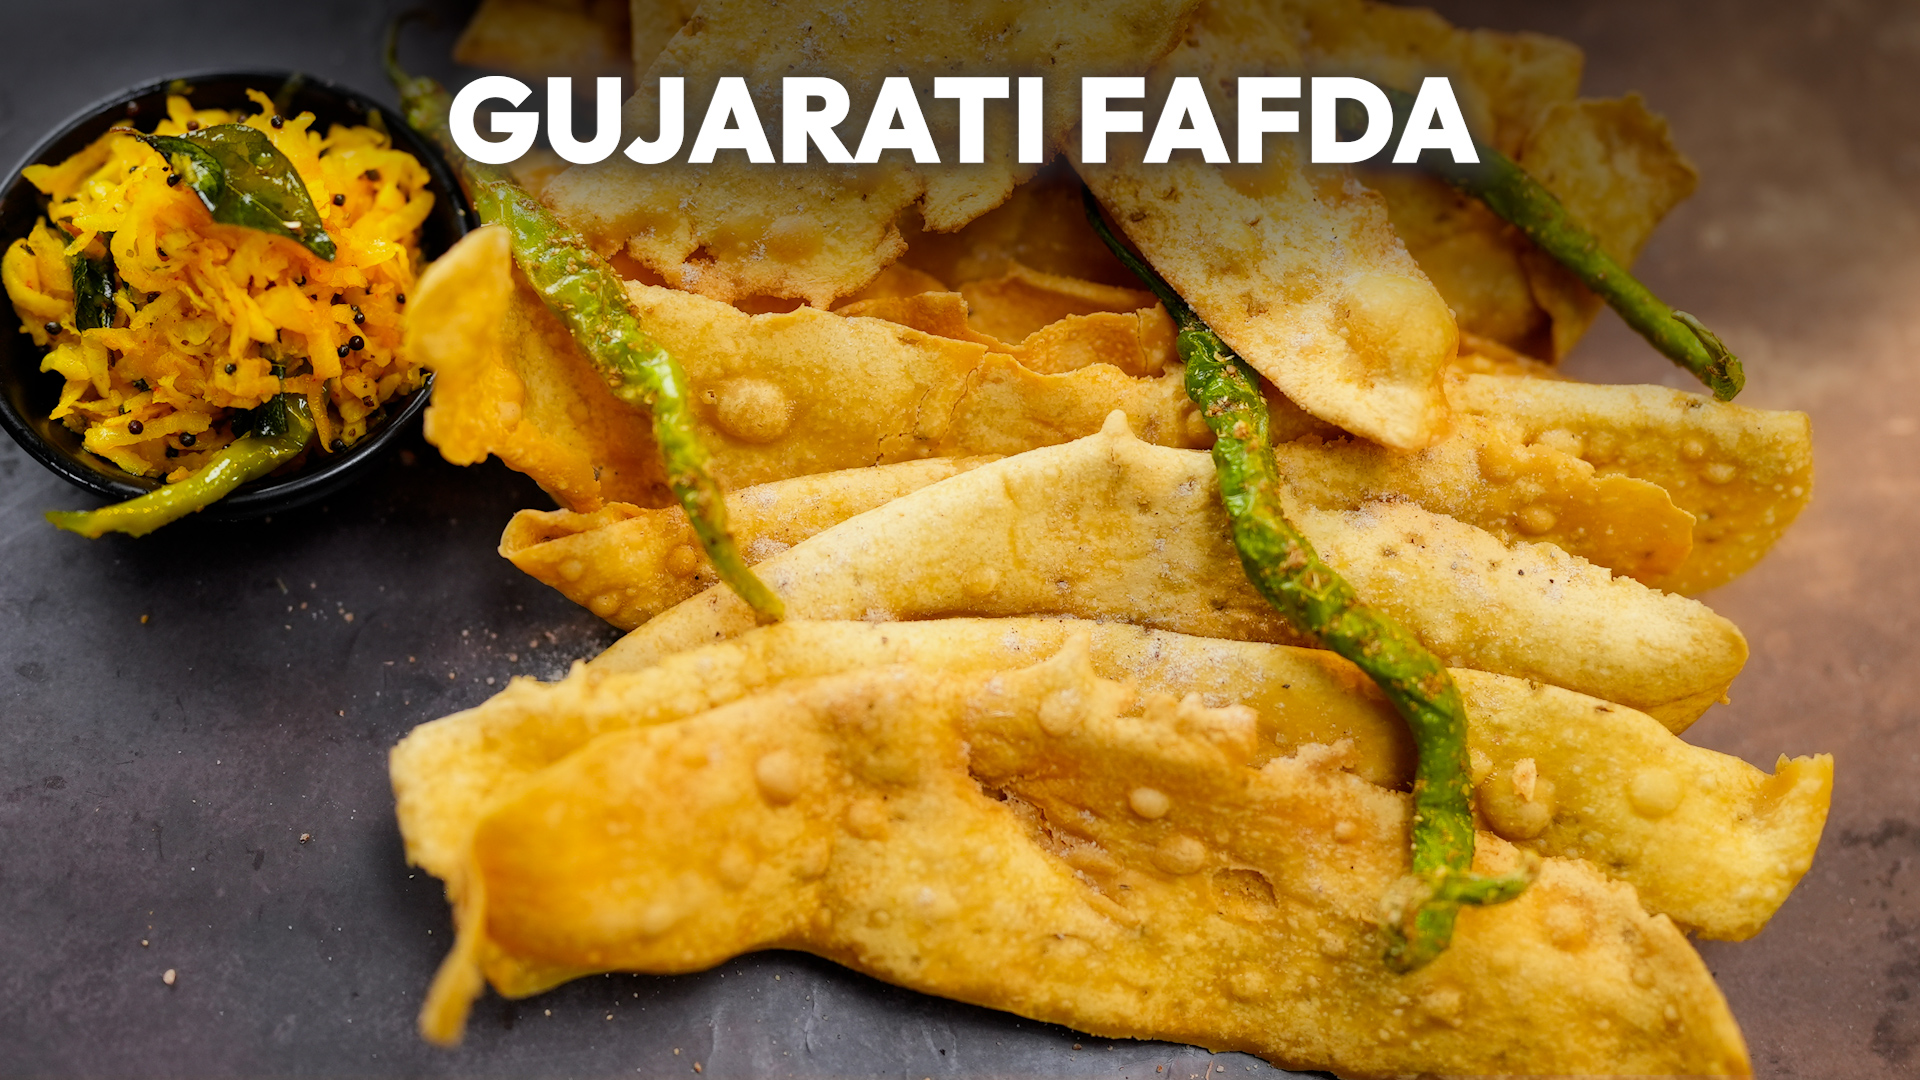 Make Restaurant-Style Gujarati Fafda in Your Own Kitchen!